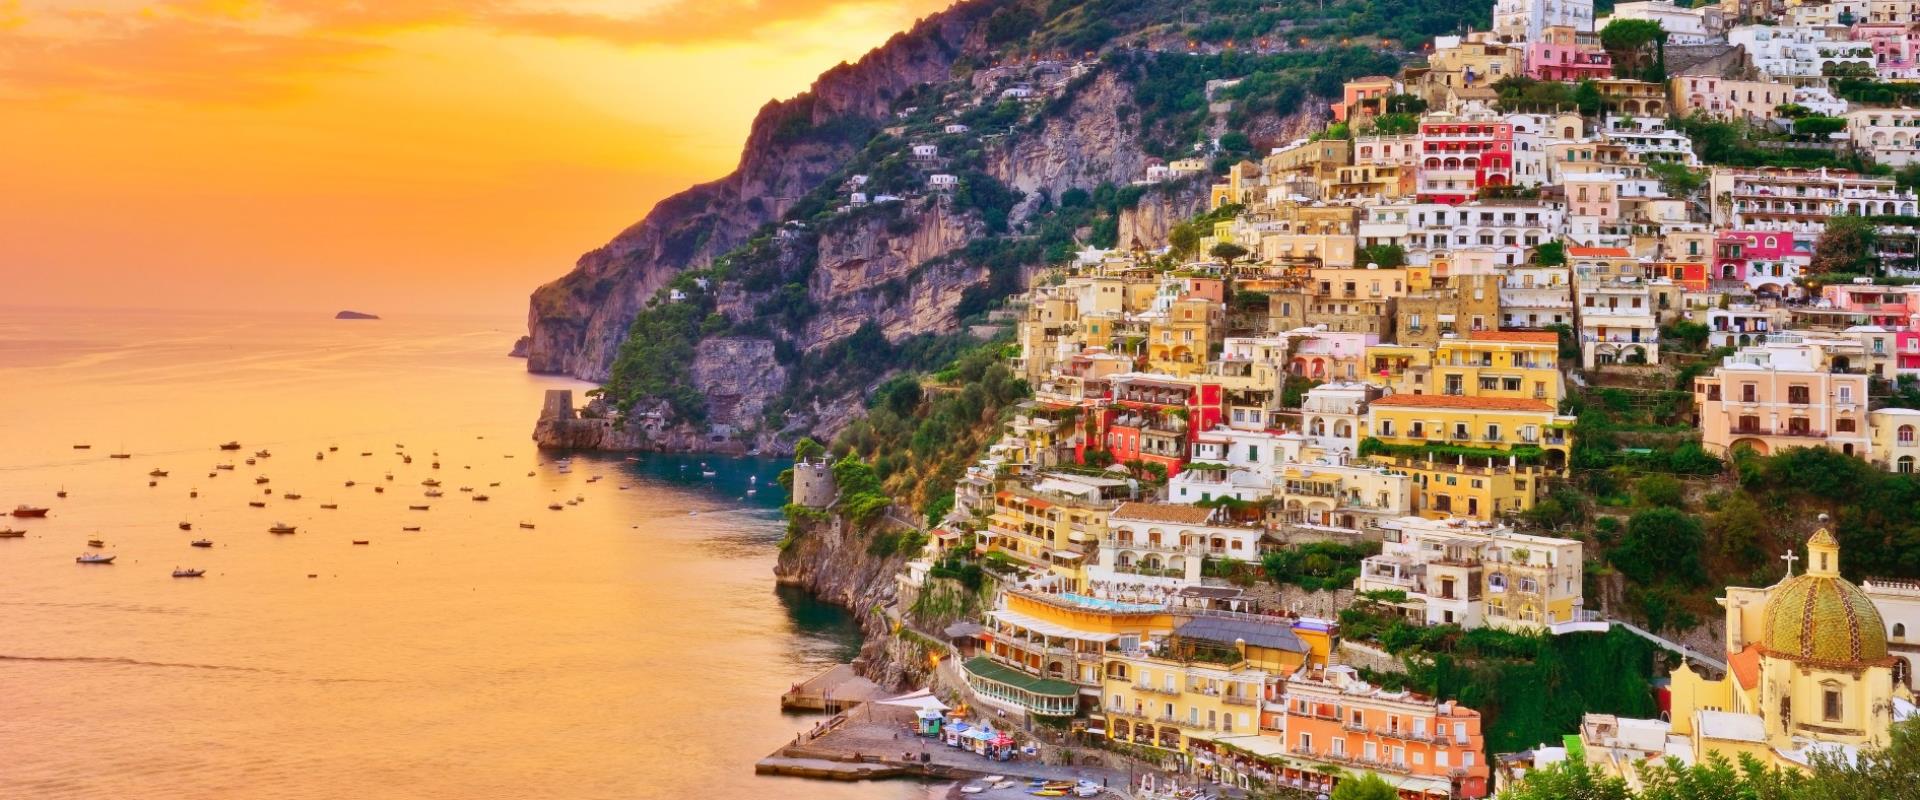 Luxury Villas on The Amalfi Coast